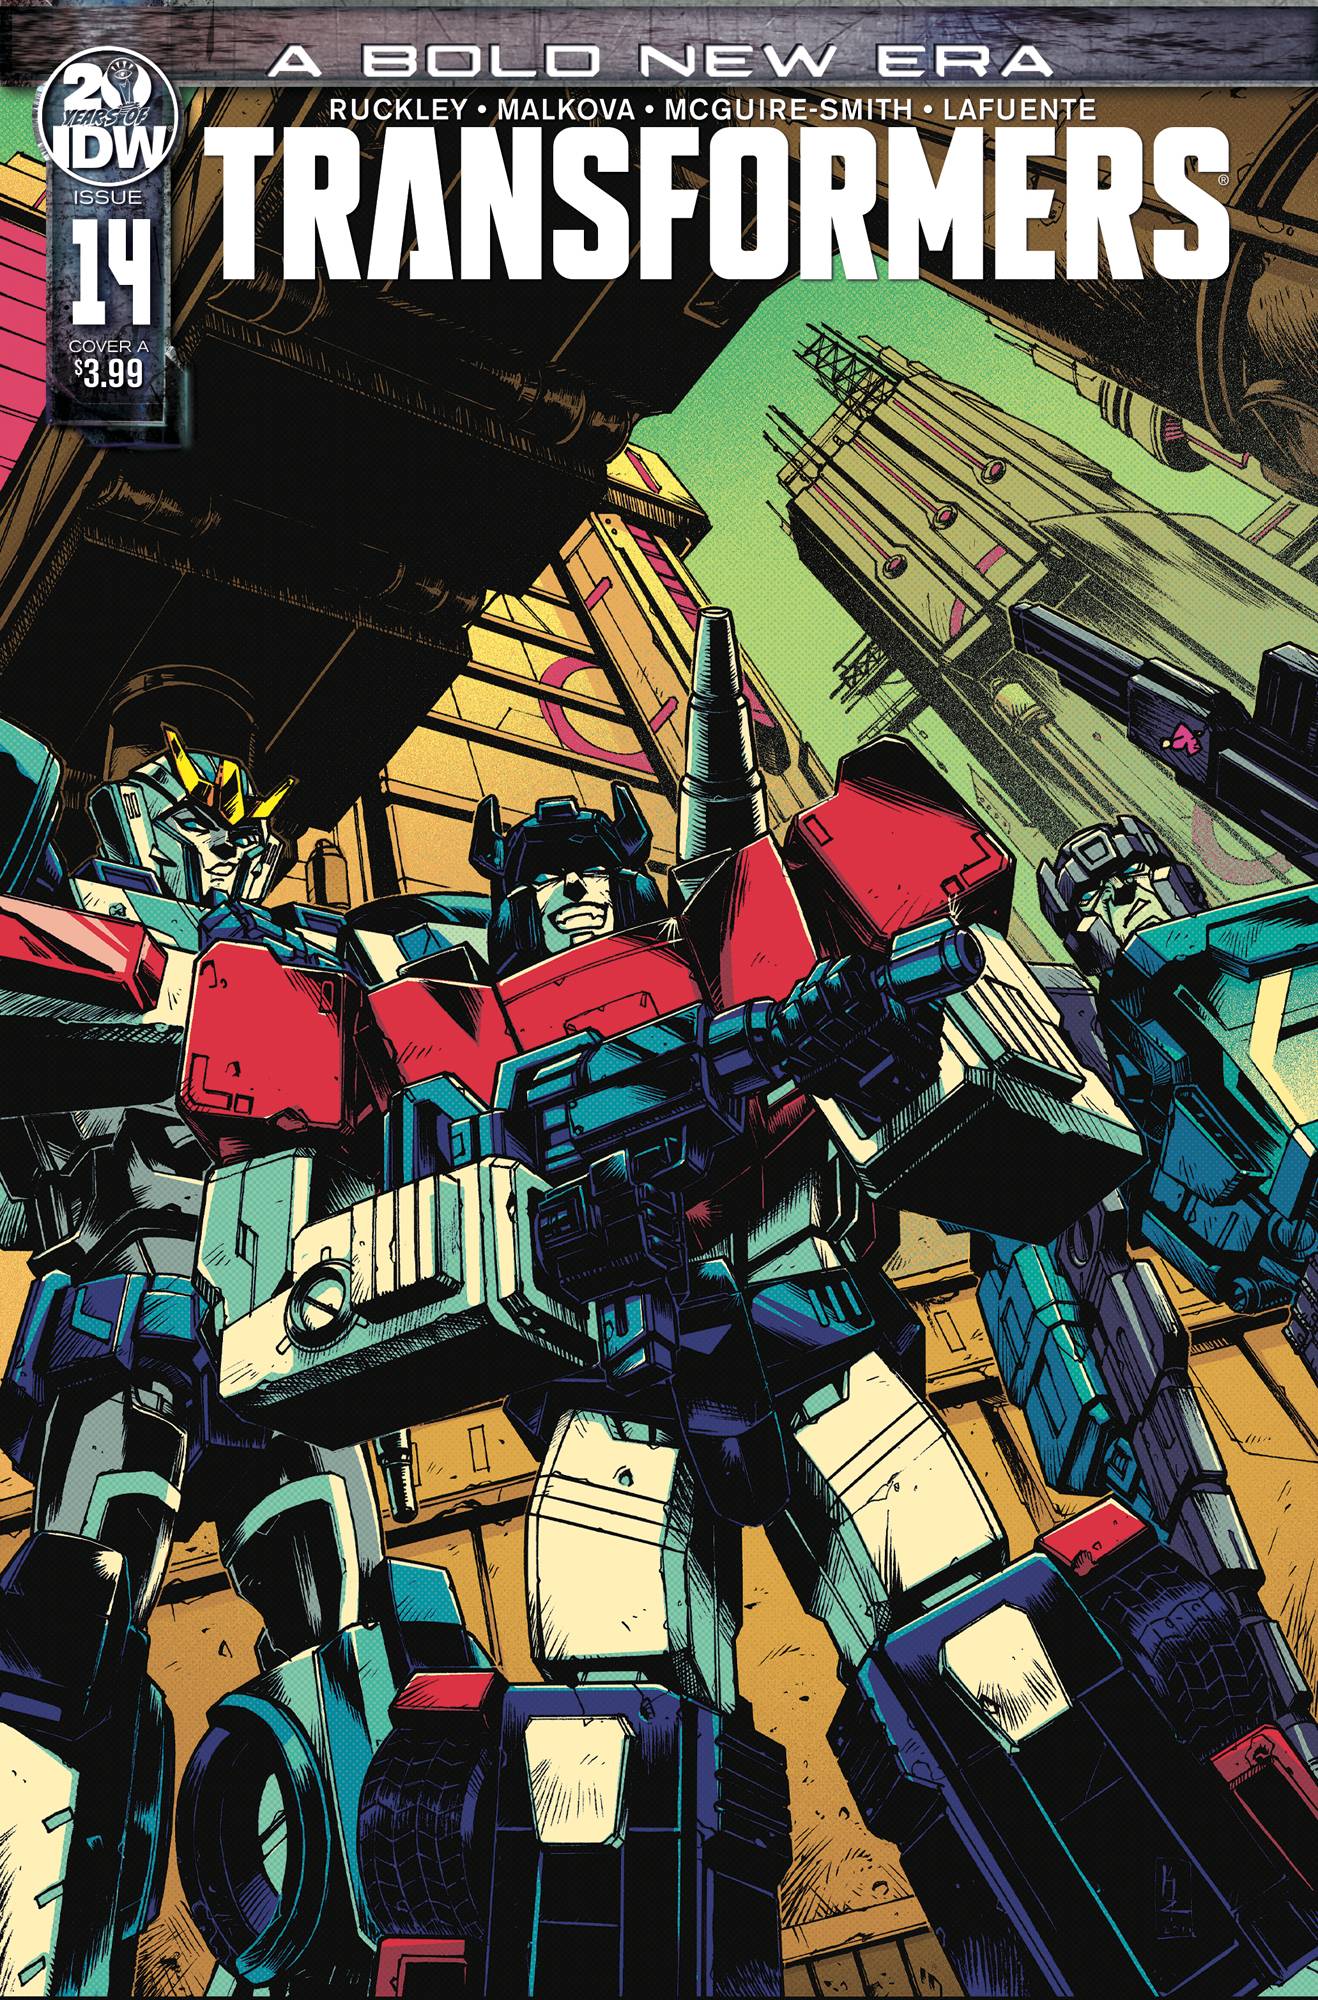 Transformers #14 Cover A Zama